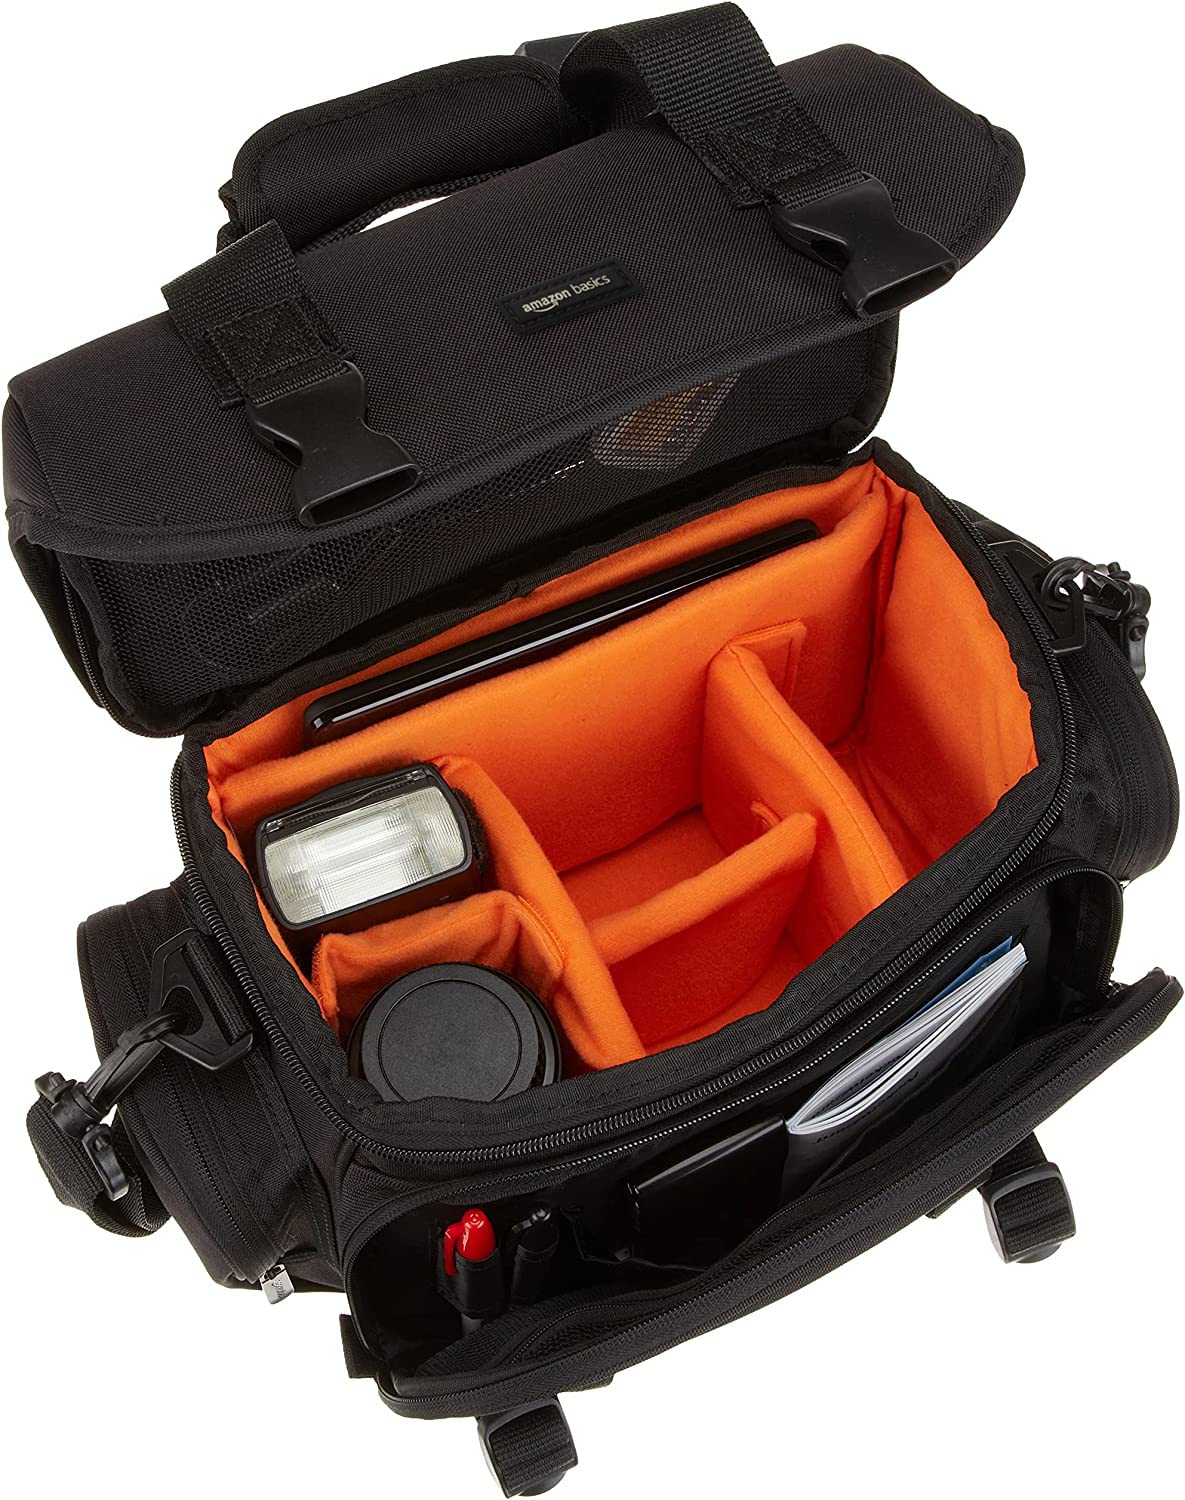 Amazon Basics Large DSLR Gadget Bag, Black with Orange Interior